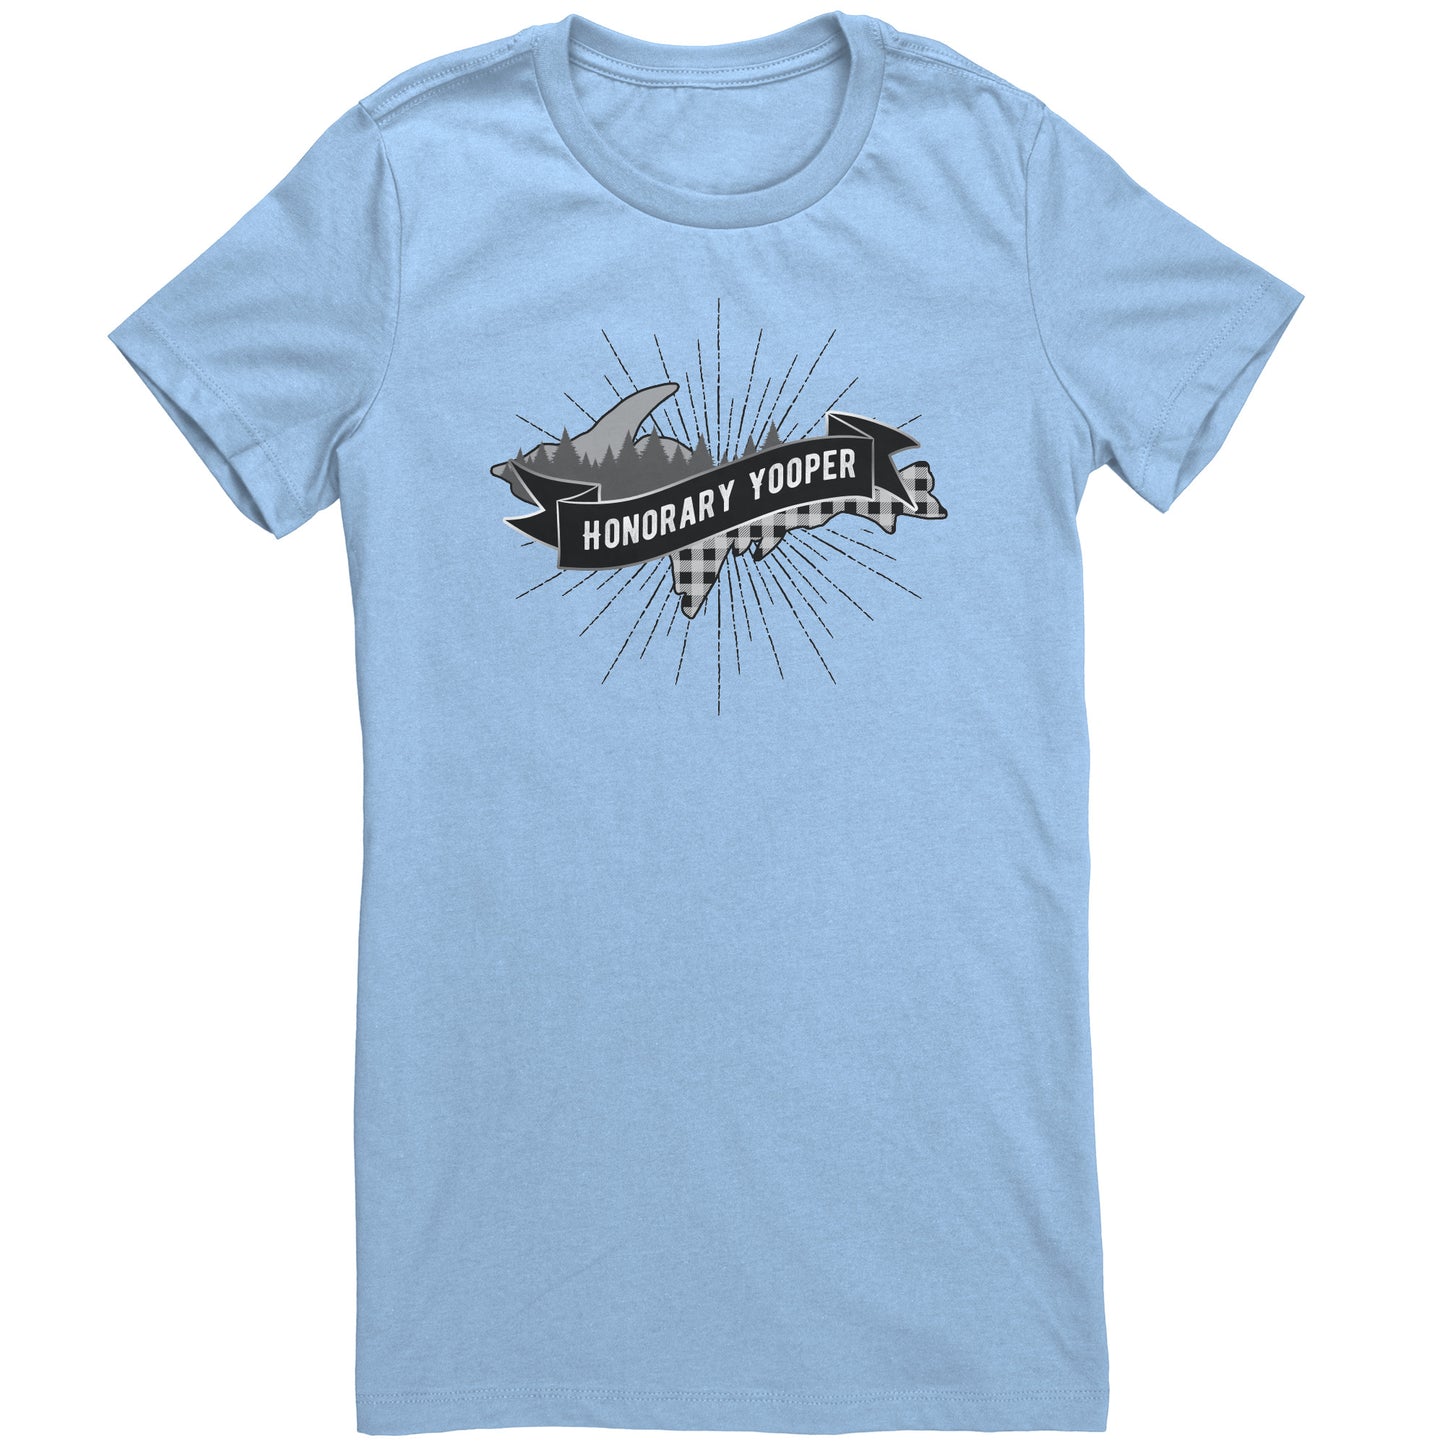 Yooper T-Shirt Women's Cut | Upper Peninsula T-shirt | Honorary Yooper Gift